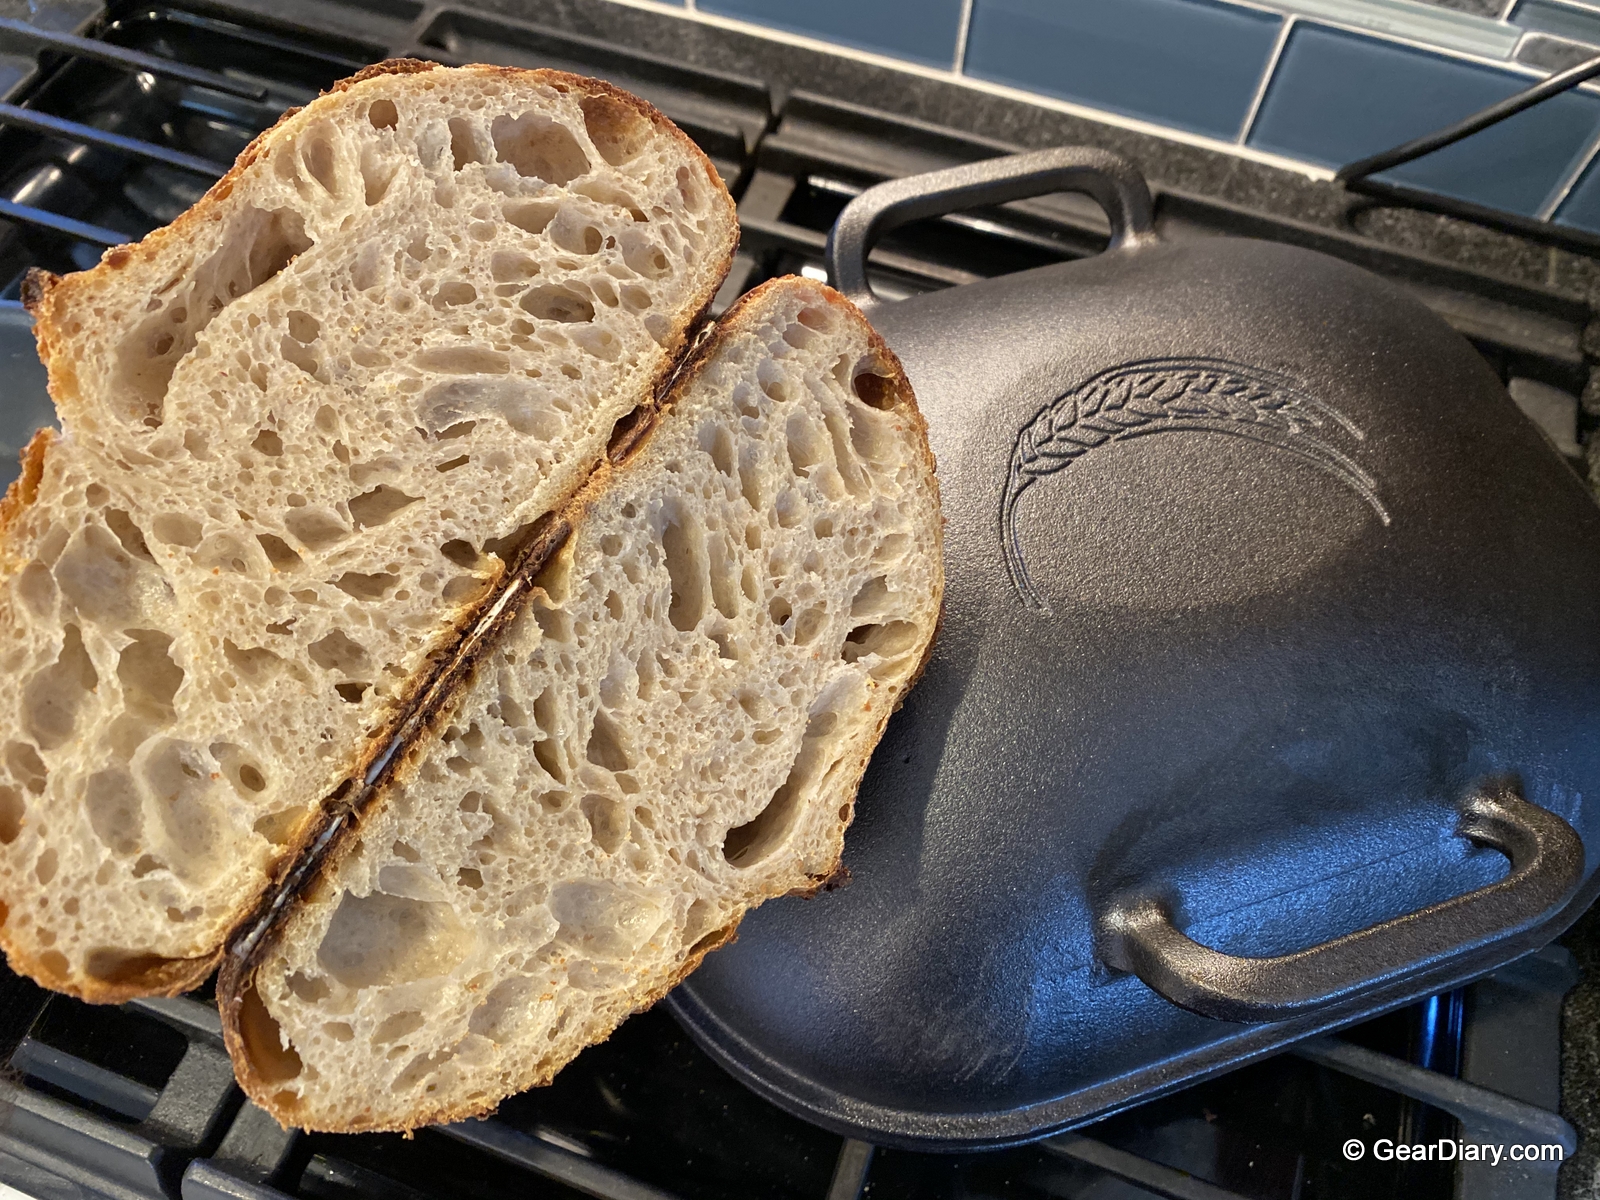 Baking sourdough in a loaf pan